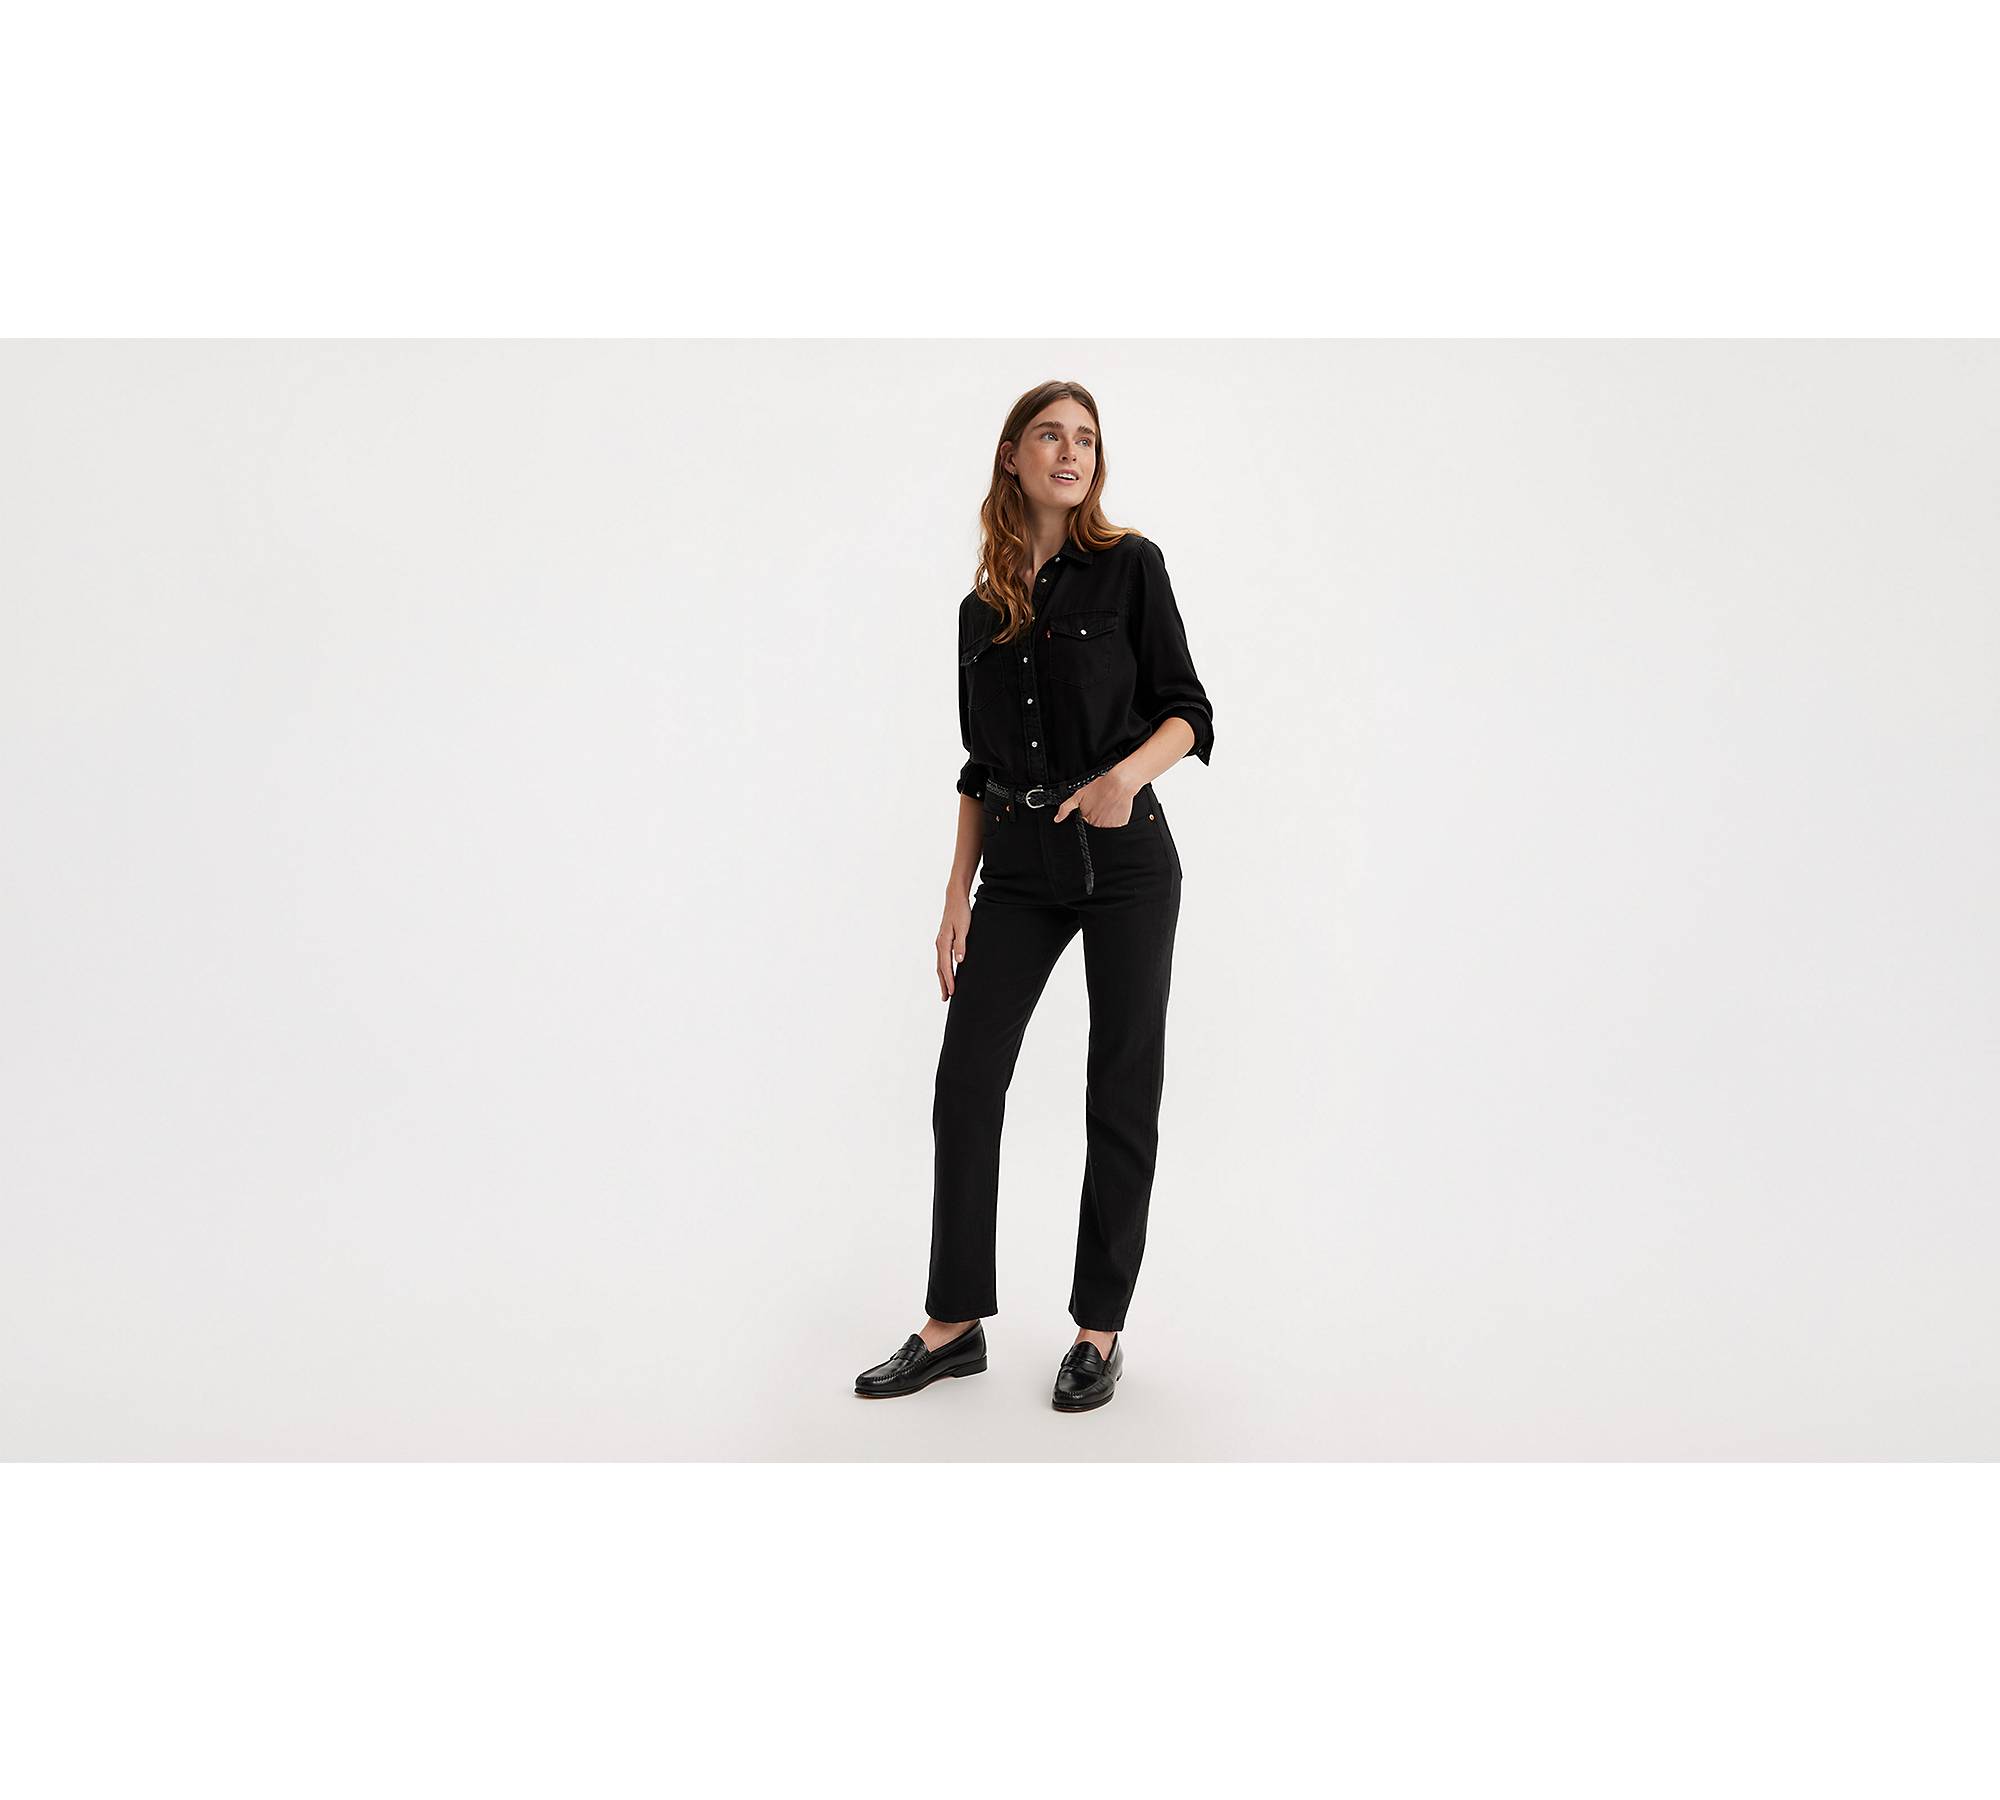 501® Original Fit Selvedge Women's Jeans - Black